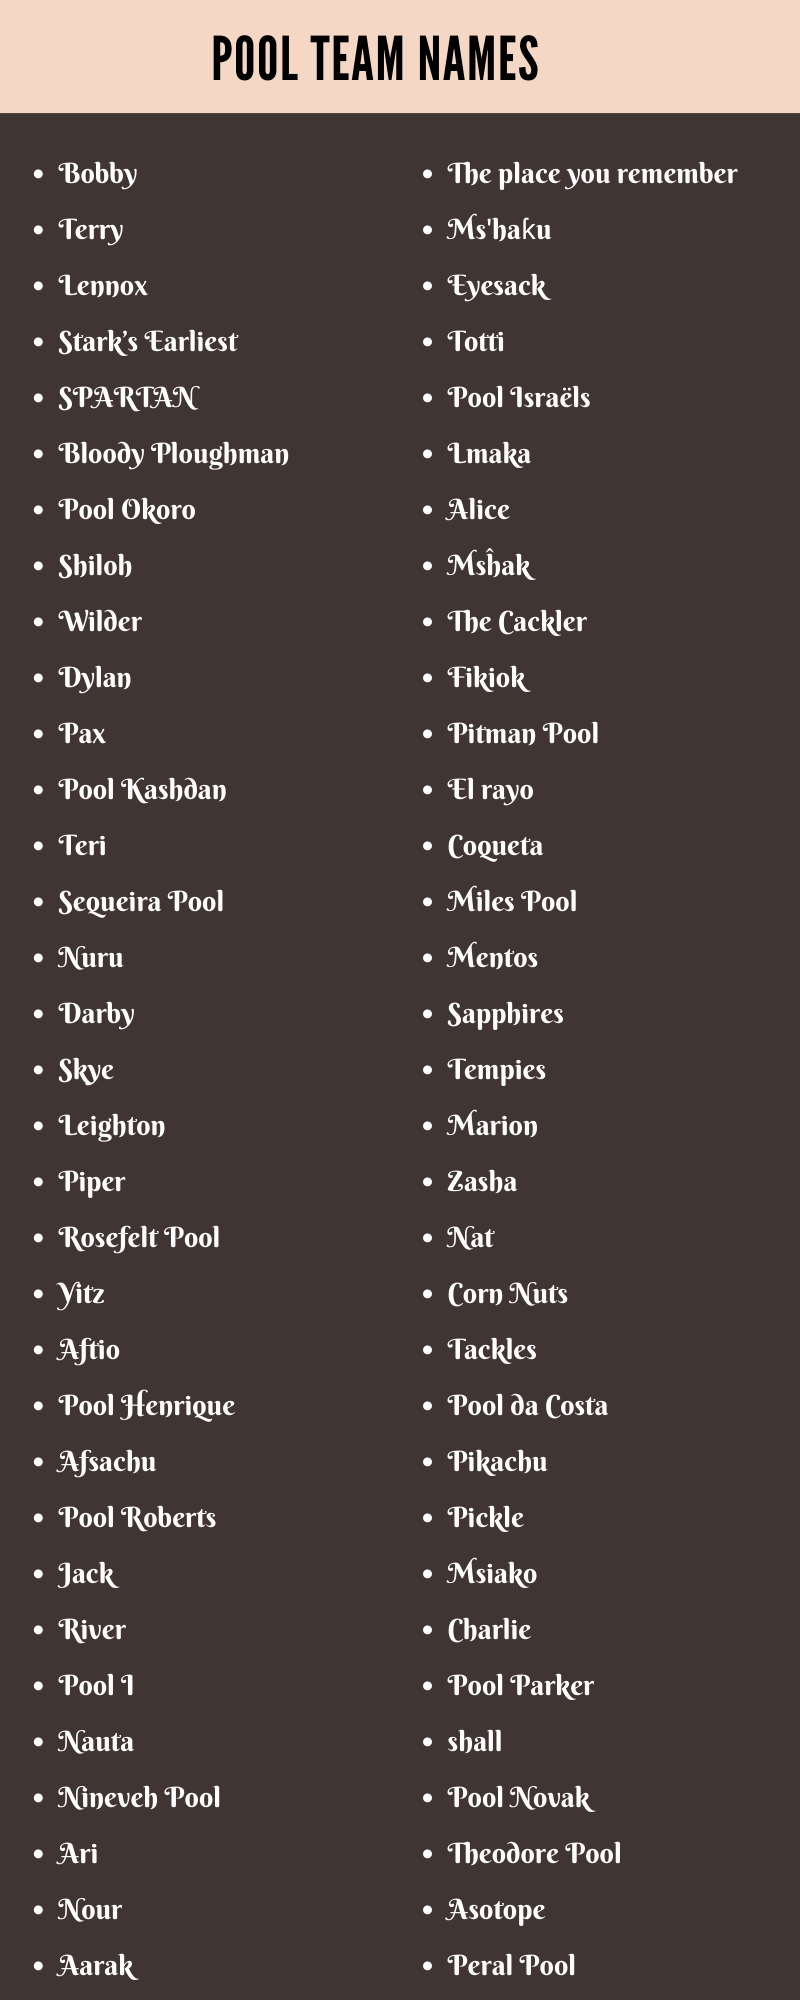 Pool Team Names